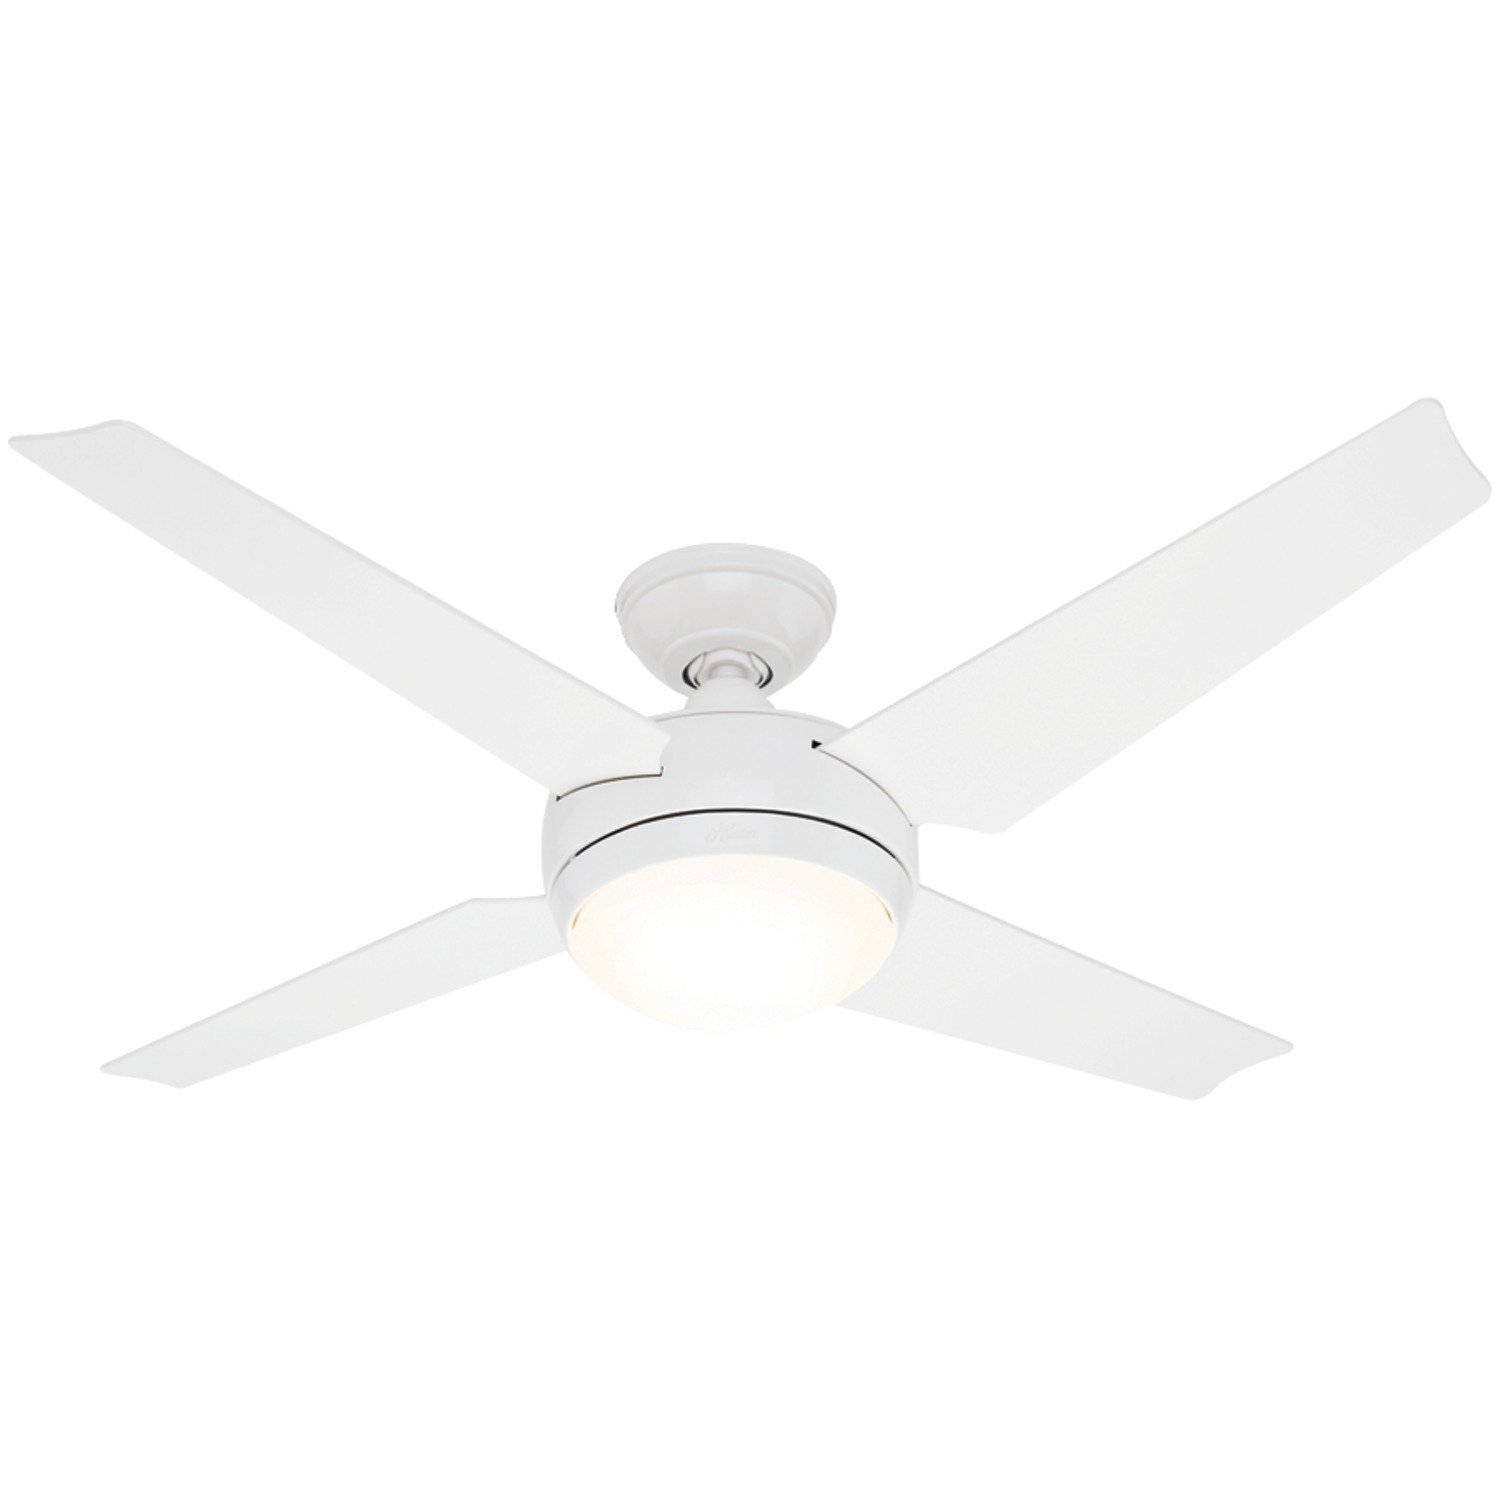 White Ceiling Fan Light Remote